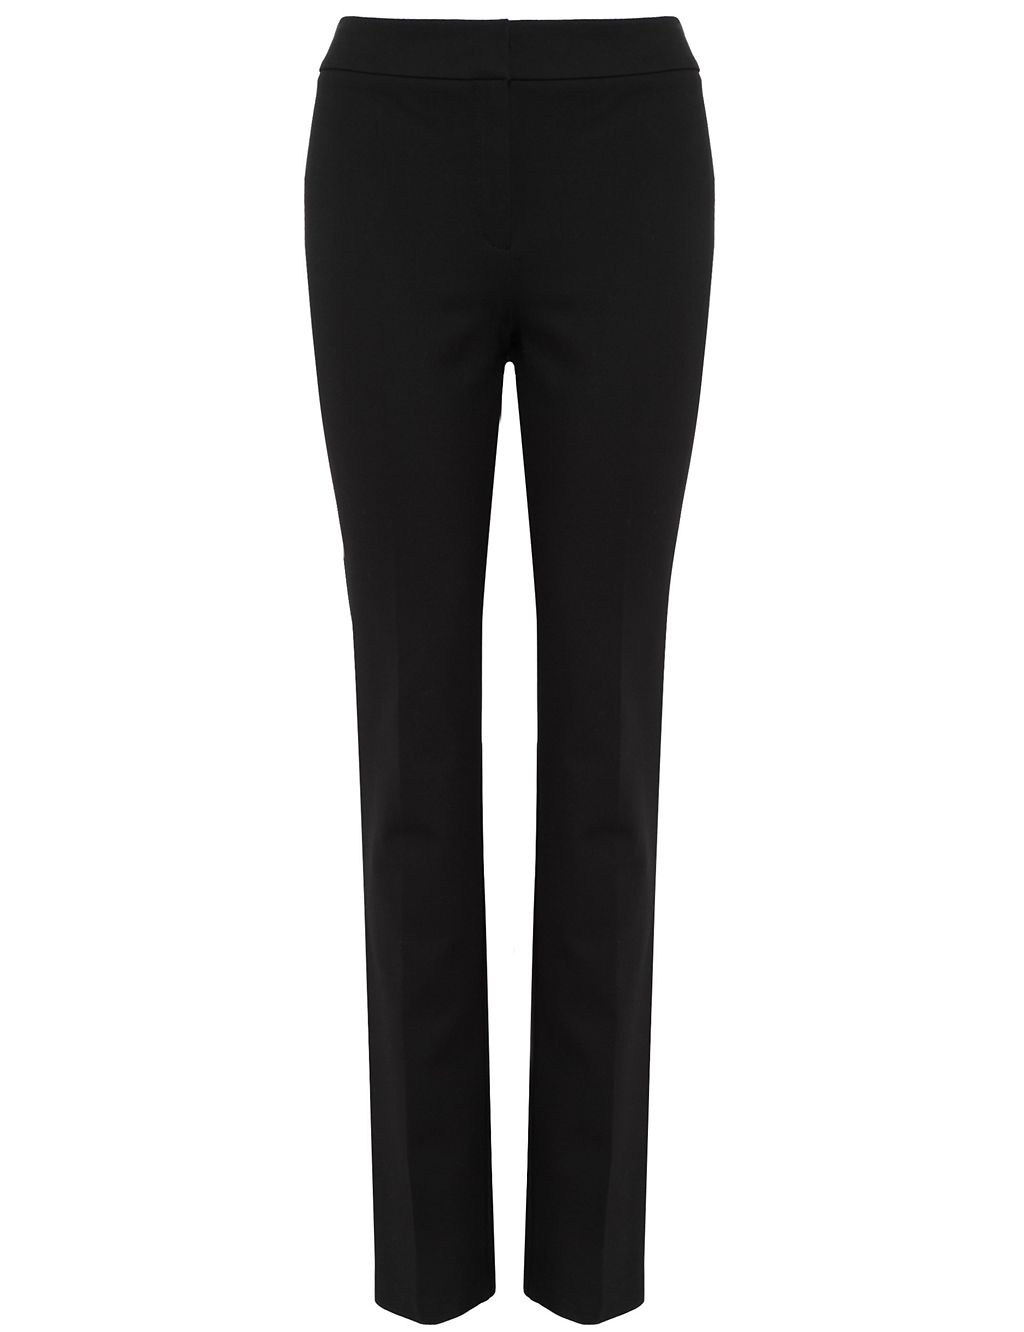 Modern Slim Leg Ponte Trousers | M&S Collection | M&S